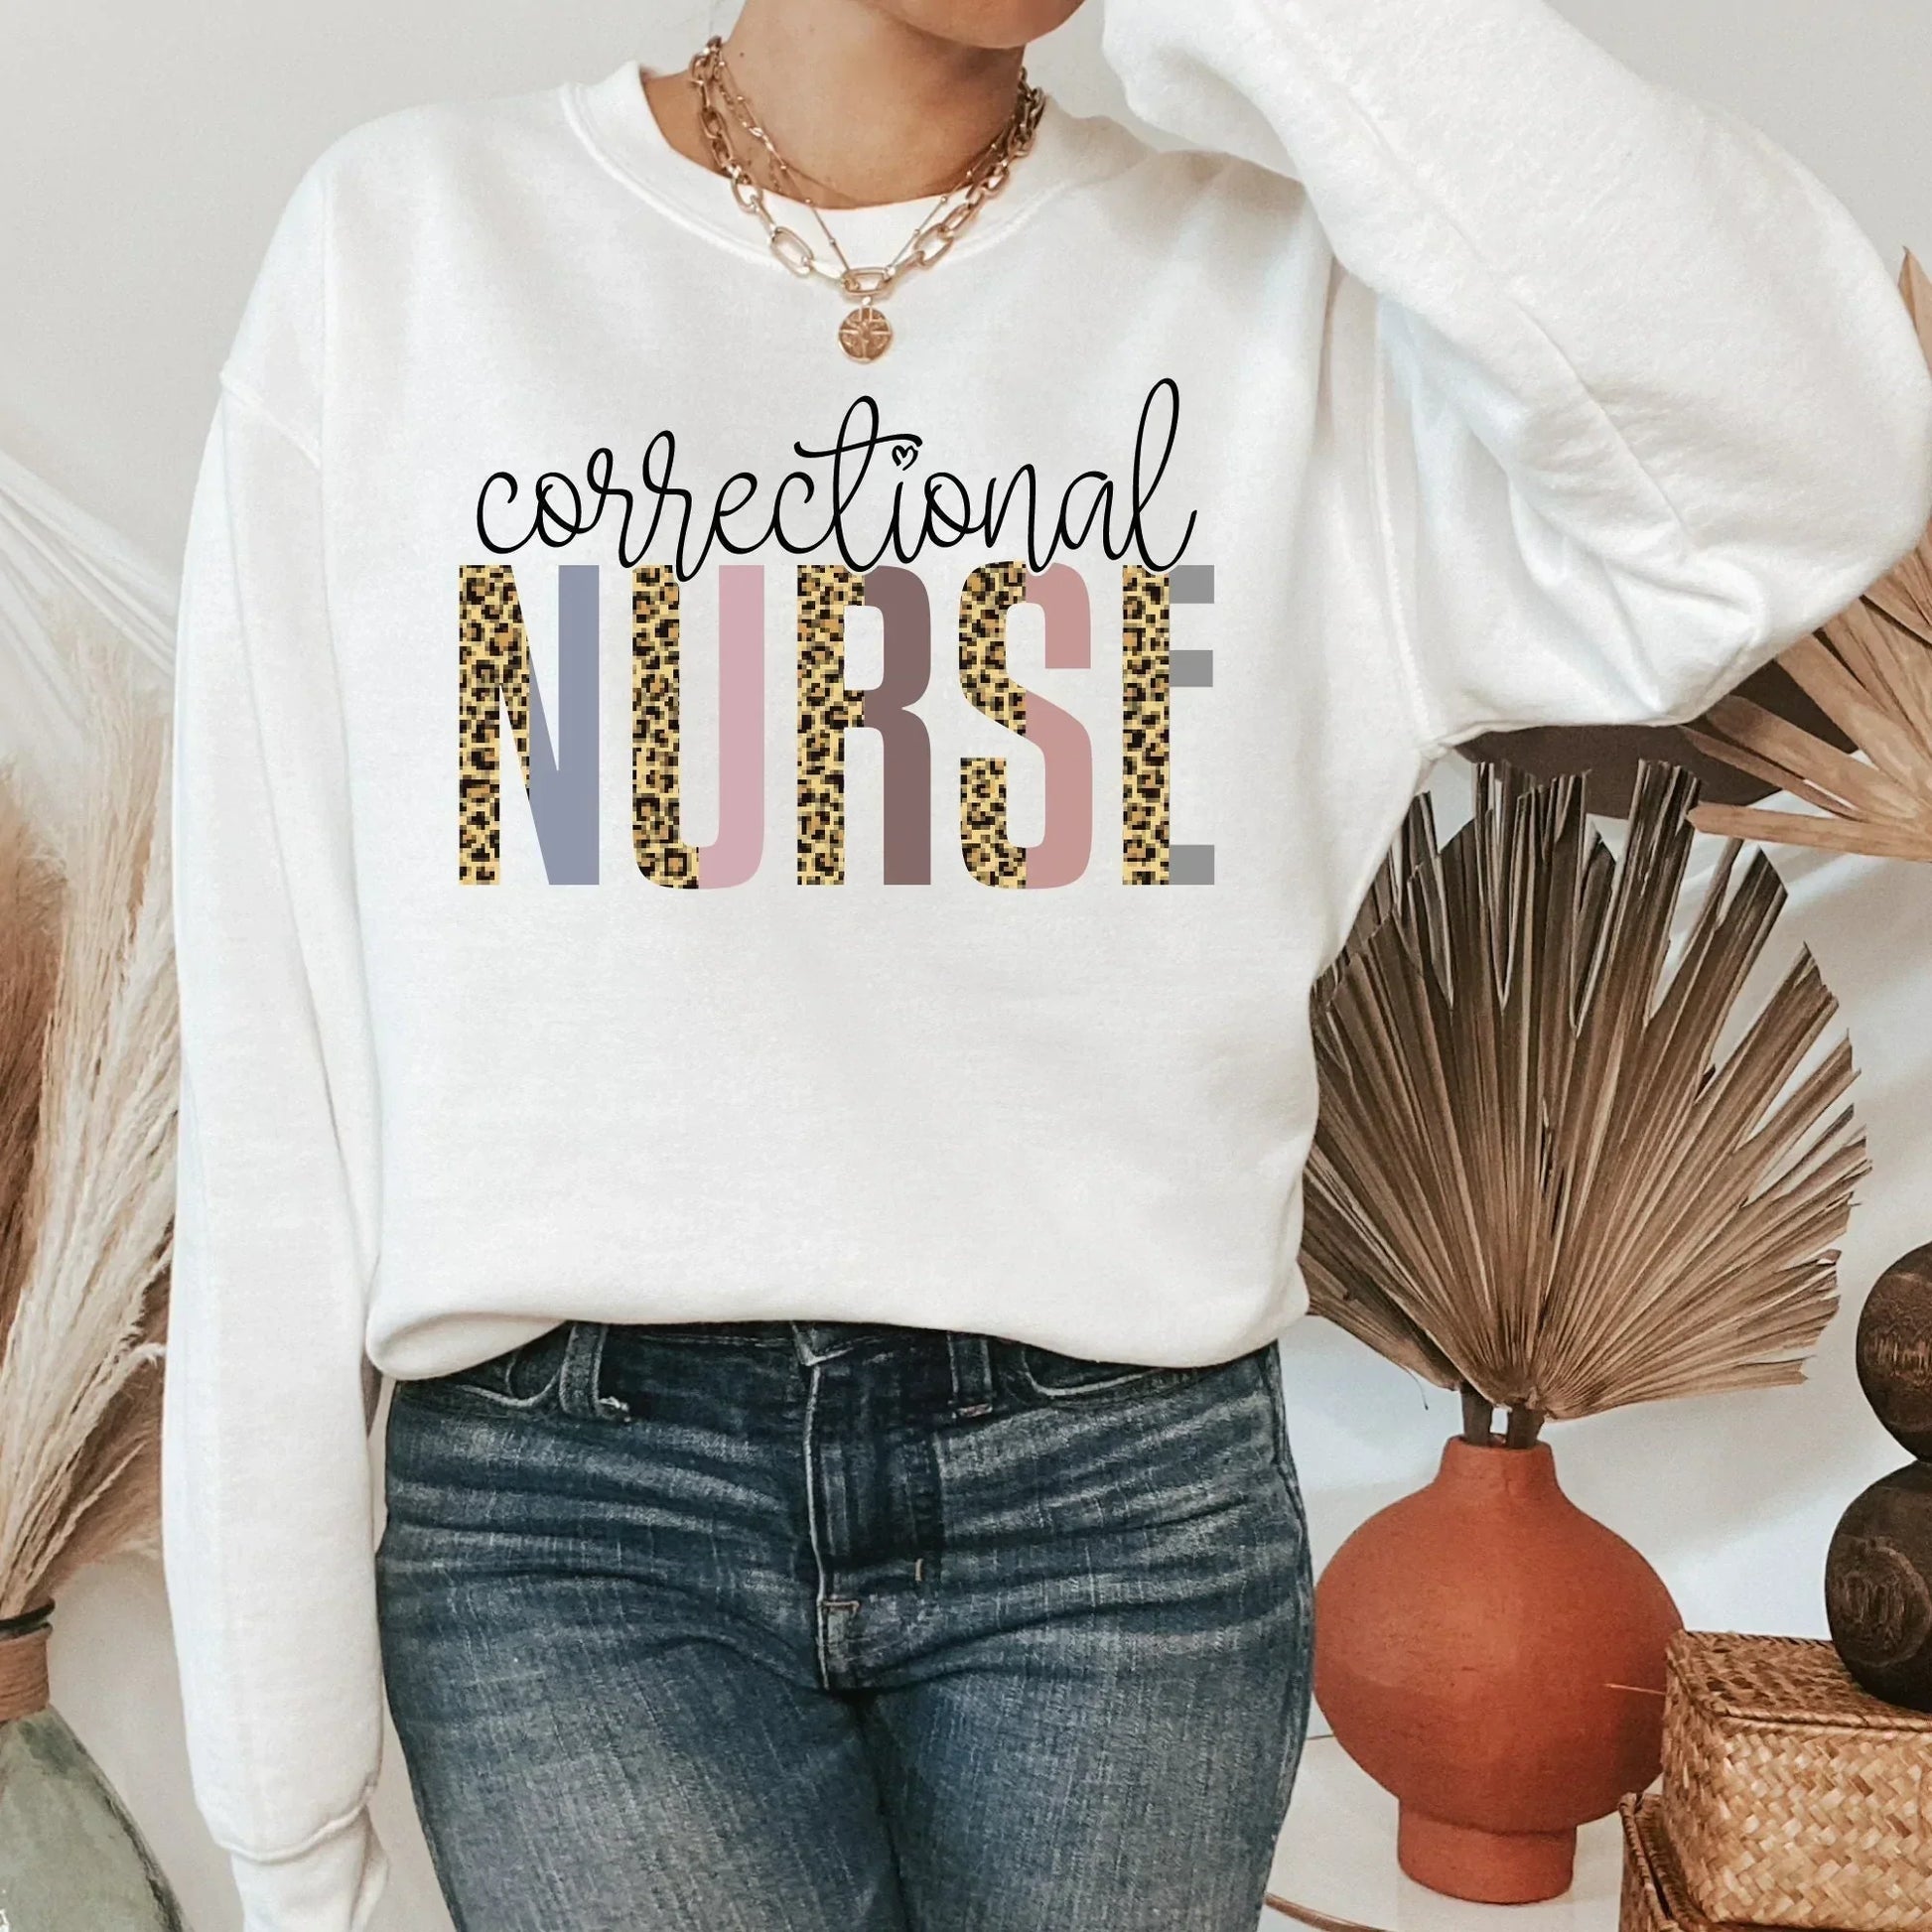 Correctional Nurse, Nurse Life, The future is female, Nurse Sweatshirt, Nurse practitioner, Nurse Hoodie, Nurse appreciation, Gift for Nurse